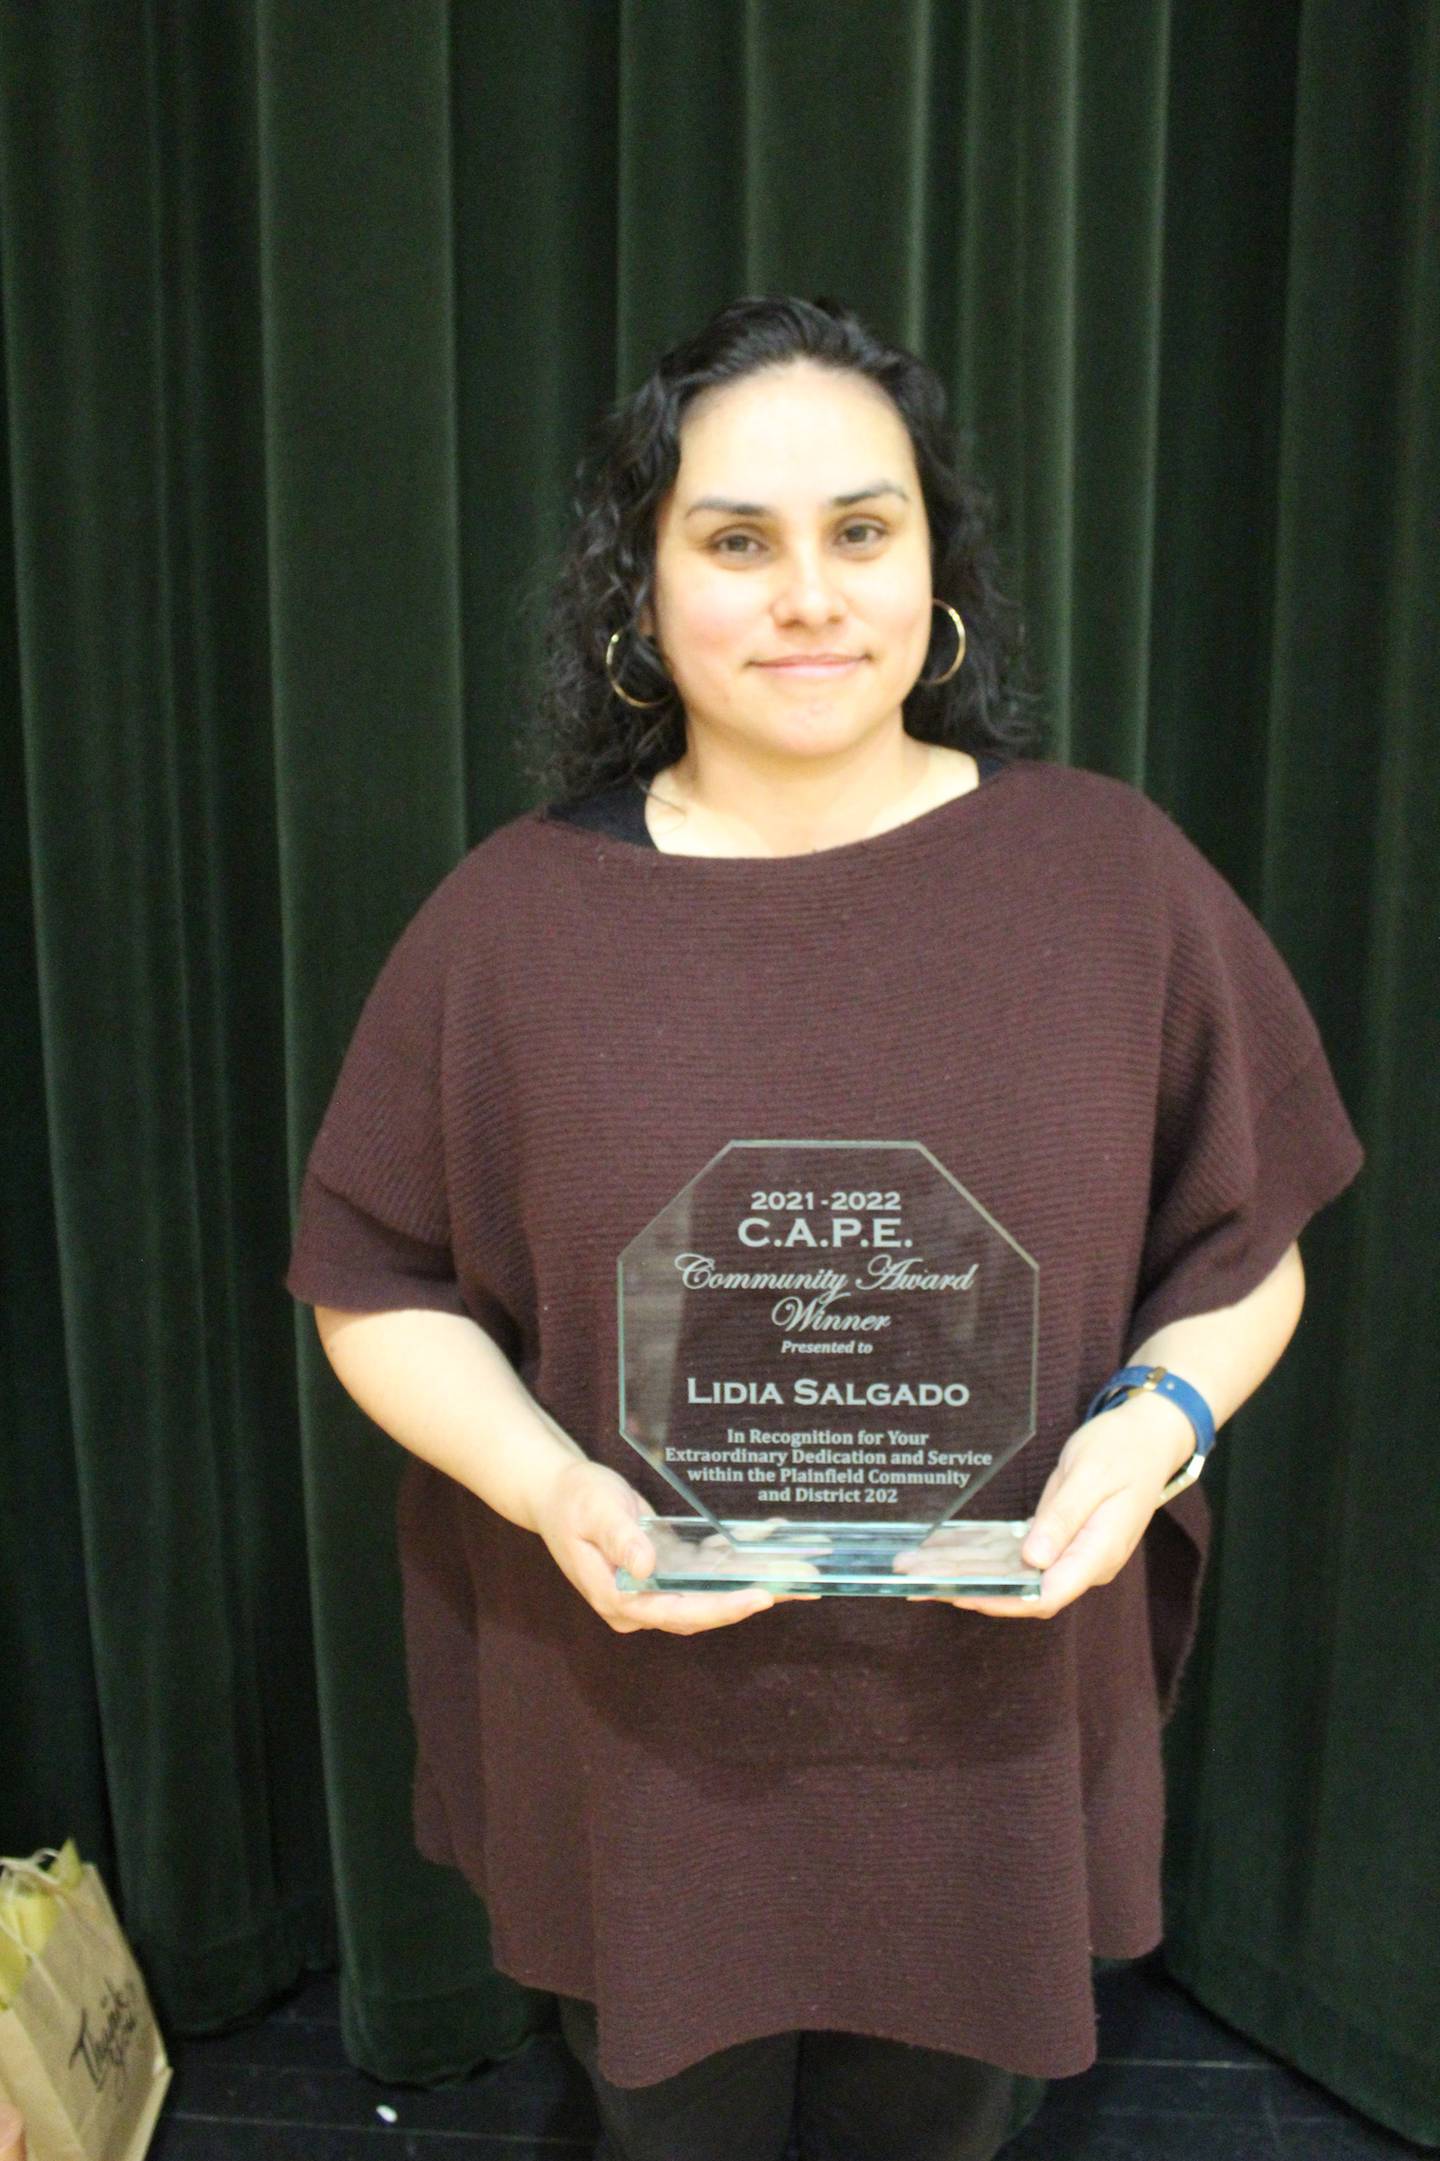 Thomas Jefferson Elementary School ESL teacher Lidia Salgado shows off her 2021-2 CAPE Community Award.